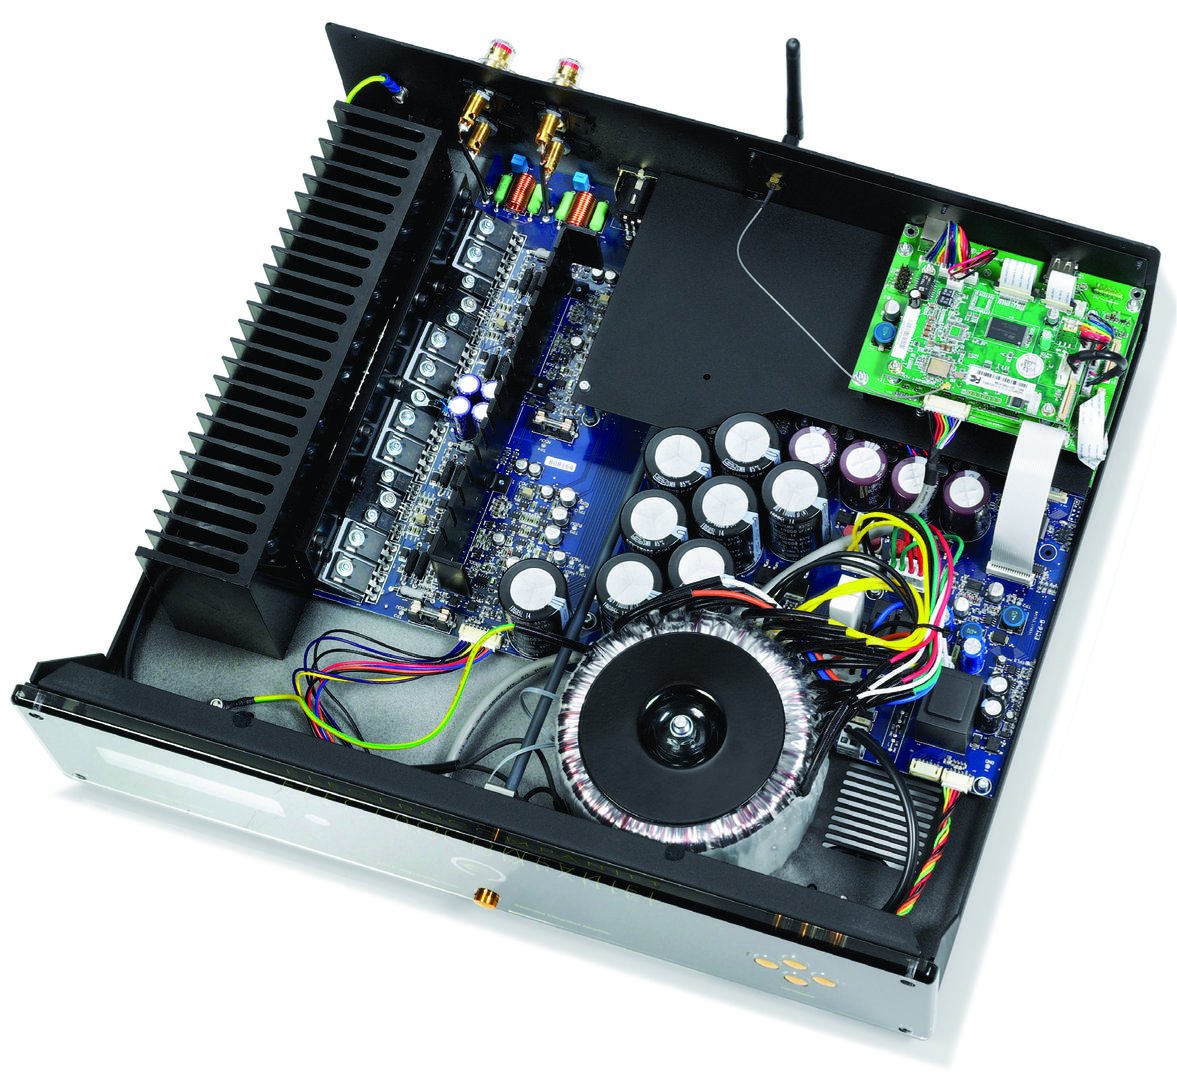 Continent Mysterious Mastery Recomandare amplificator. - Pagina 3 - Sisteme stereo - HiFi Tech